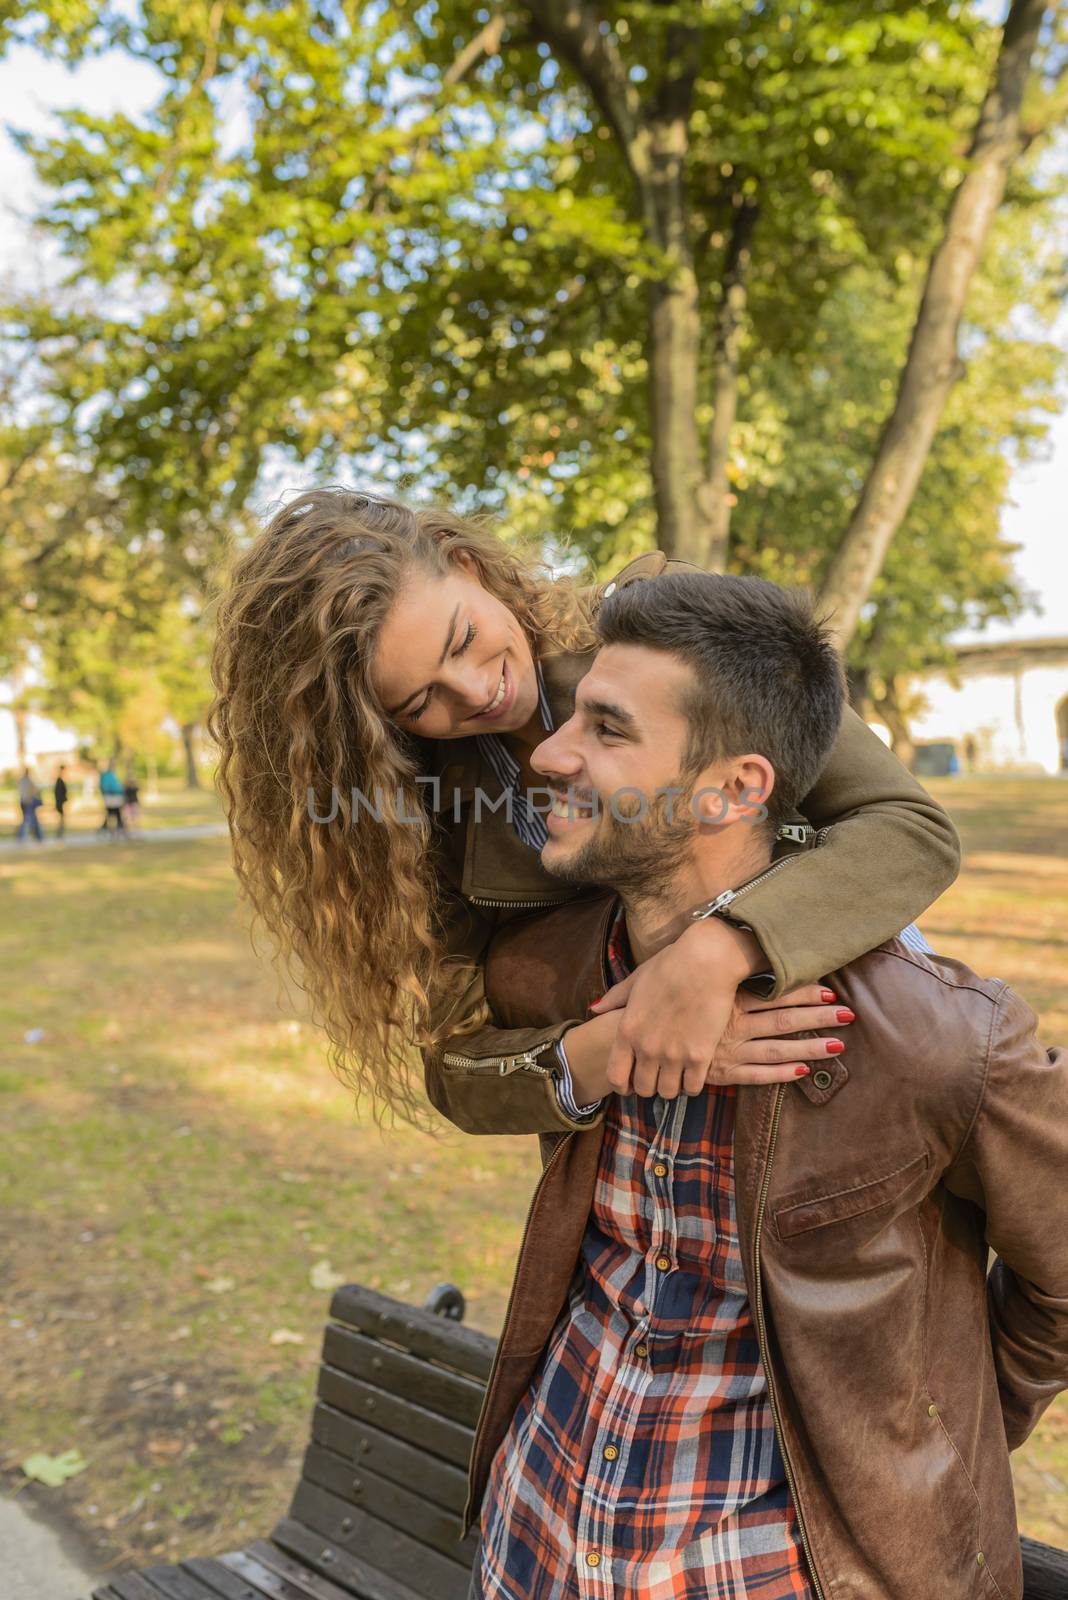 Beautiful long haired girl hugging her boyfriend by VeraAgency